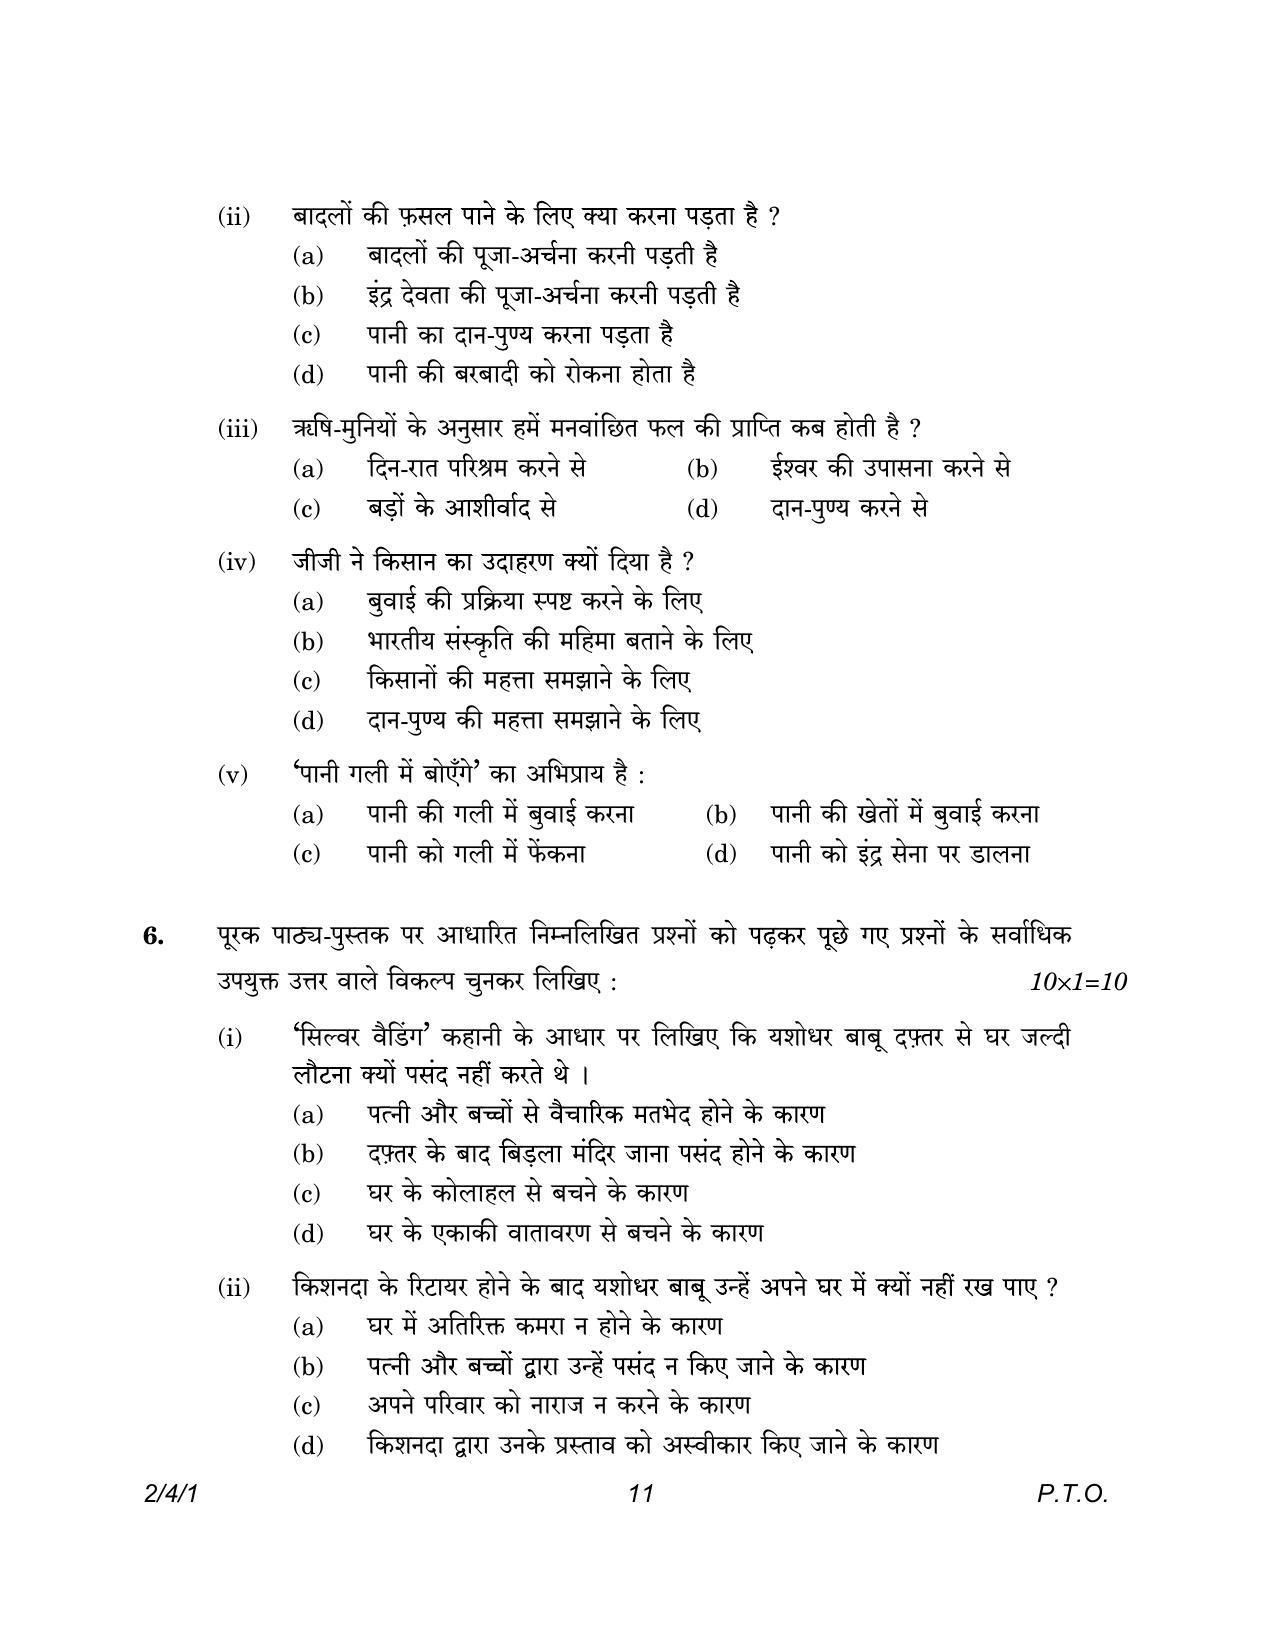 CBSE Class 12 2-4-1 Hindi Core version 2023 Question Paper - Page 11